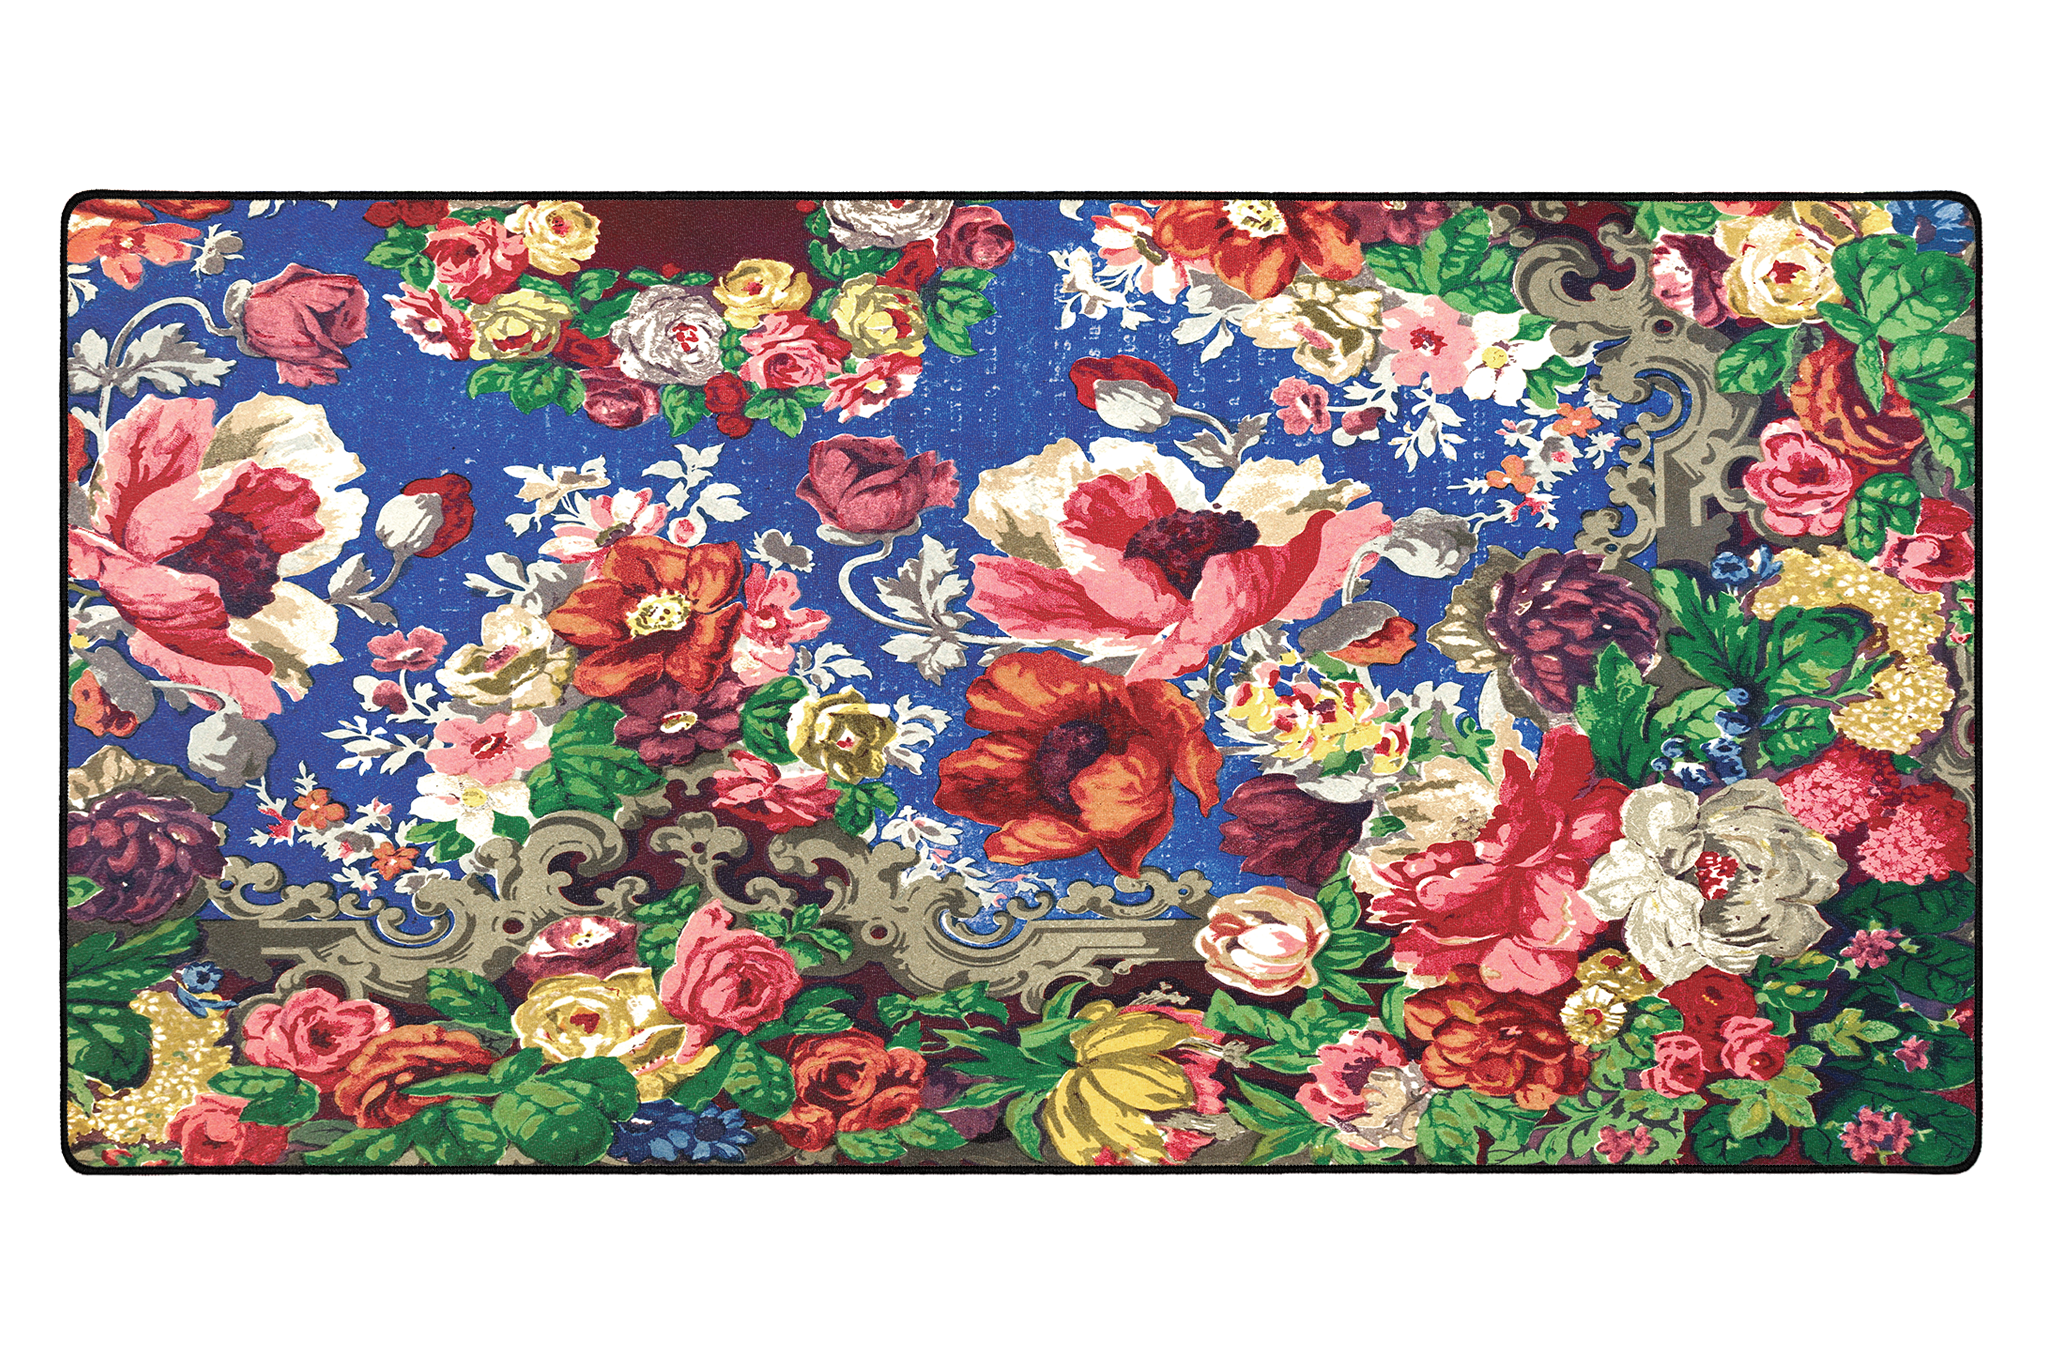 Flowers by Sir Matthew Digby Wyatt - The Mousepad Company